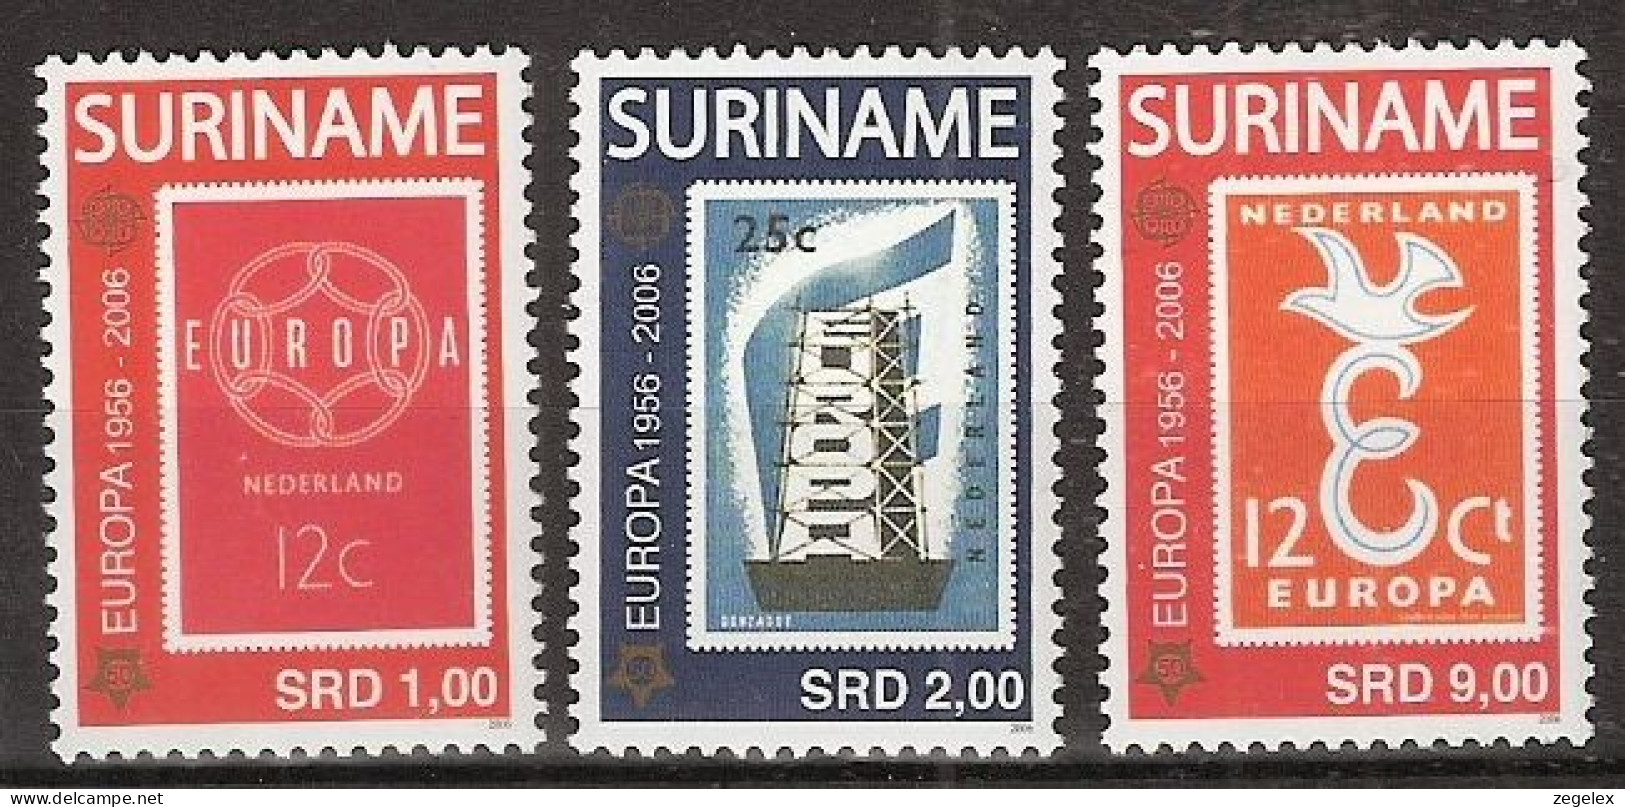 Suriname2006 ZBL 1358-60 EUROPA EUROPE MNH/**/Postfris  - Suriname